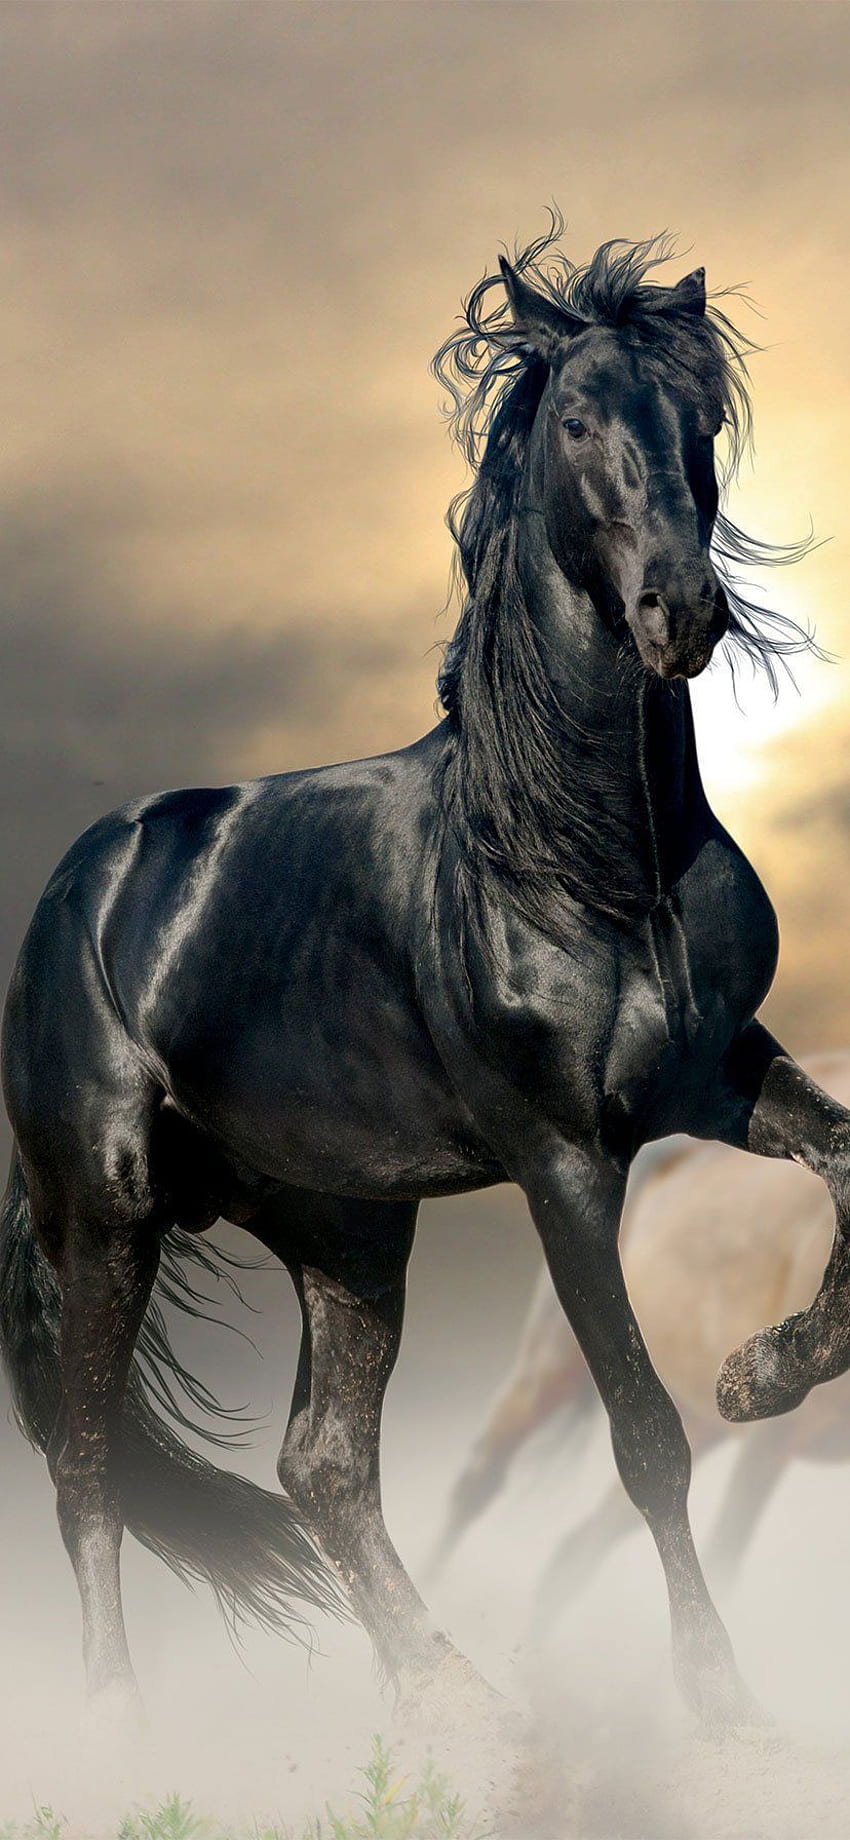 500 Black Horse Pictures HD  Download Free Images on Unsplash